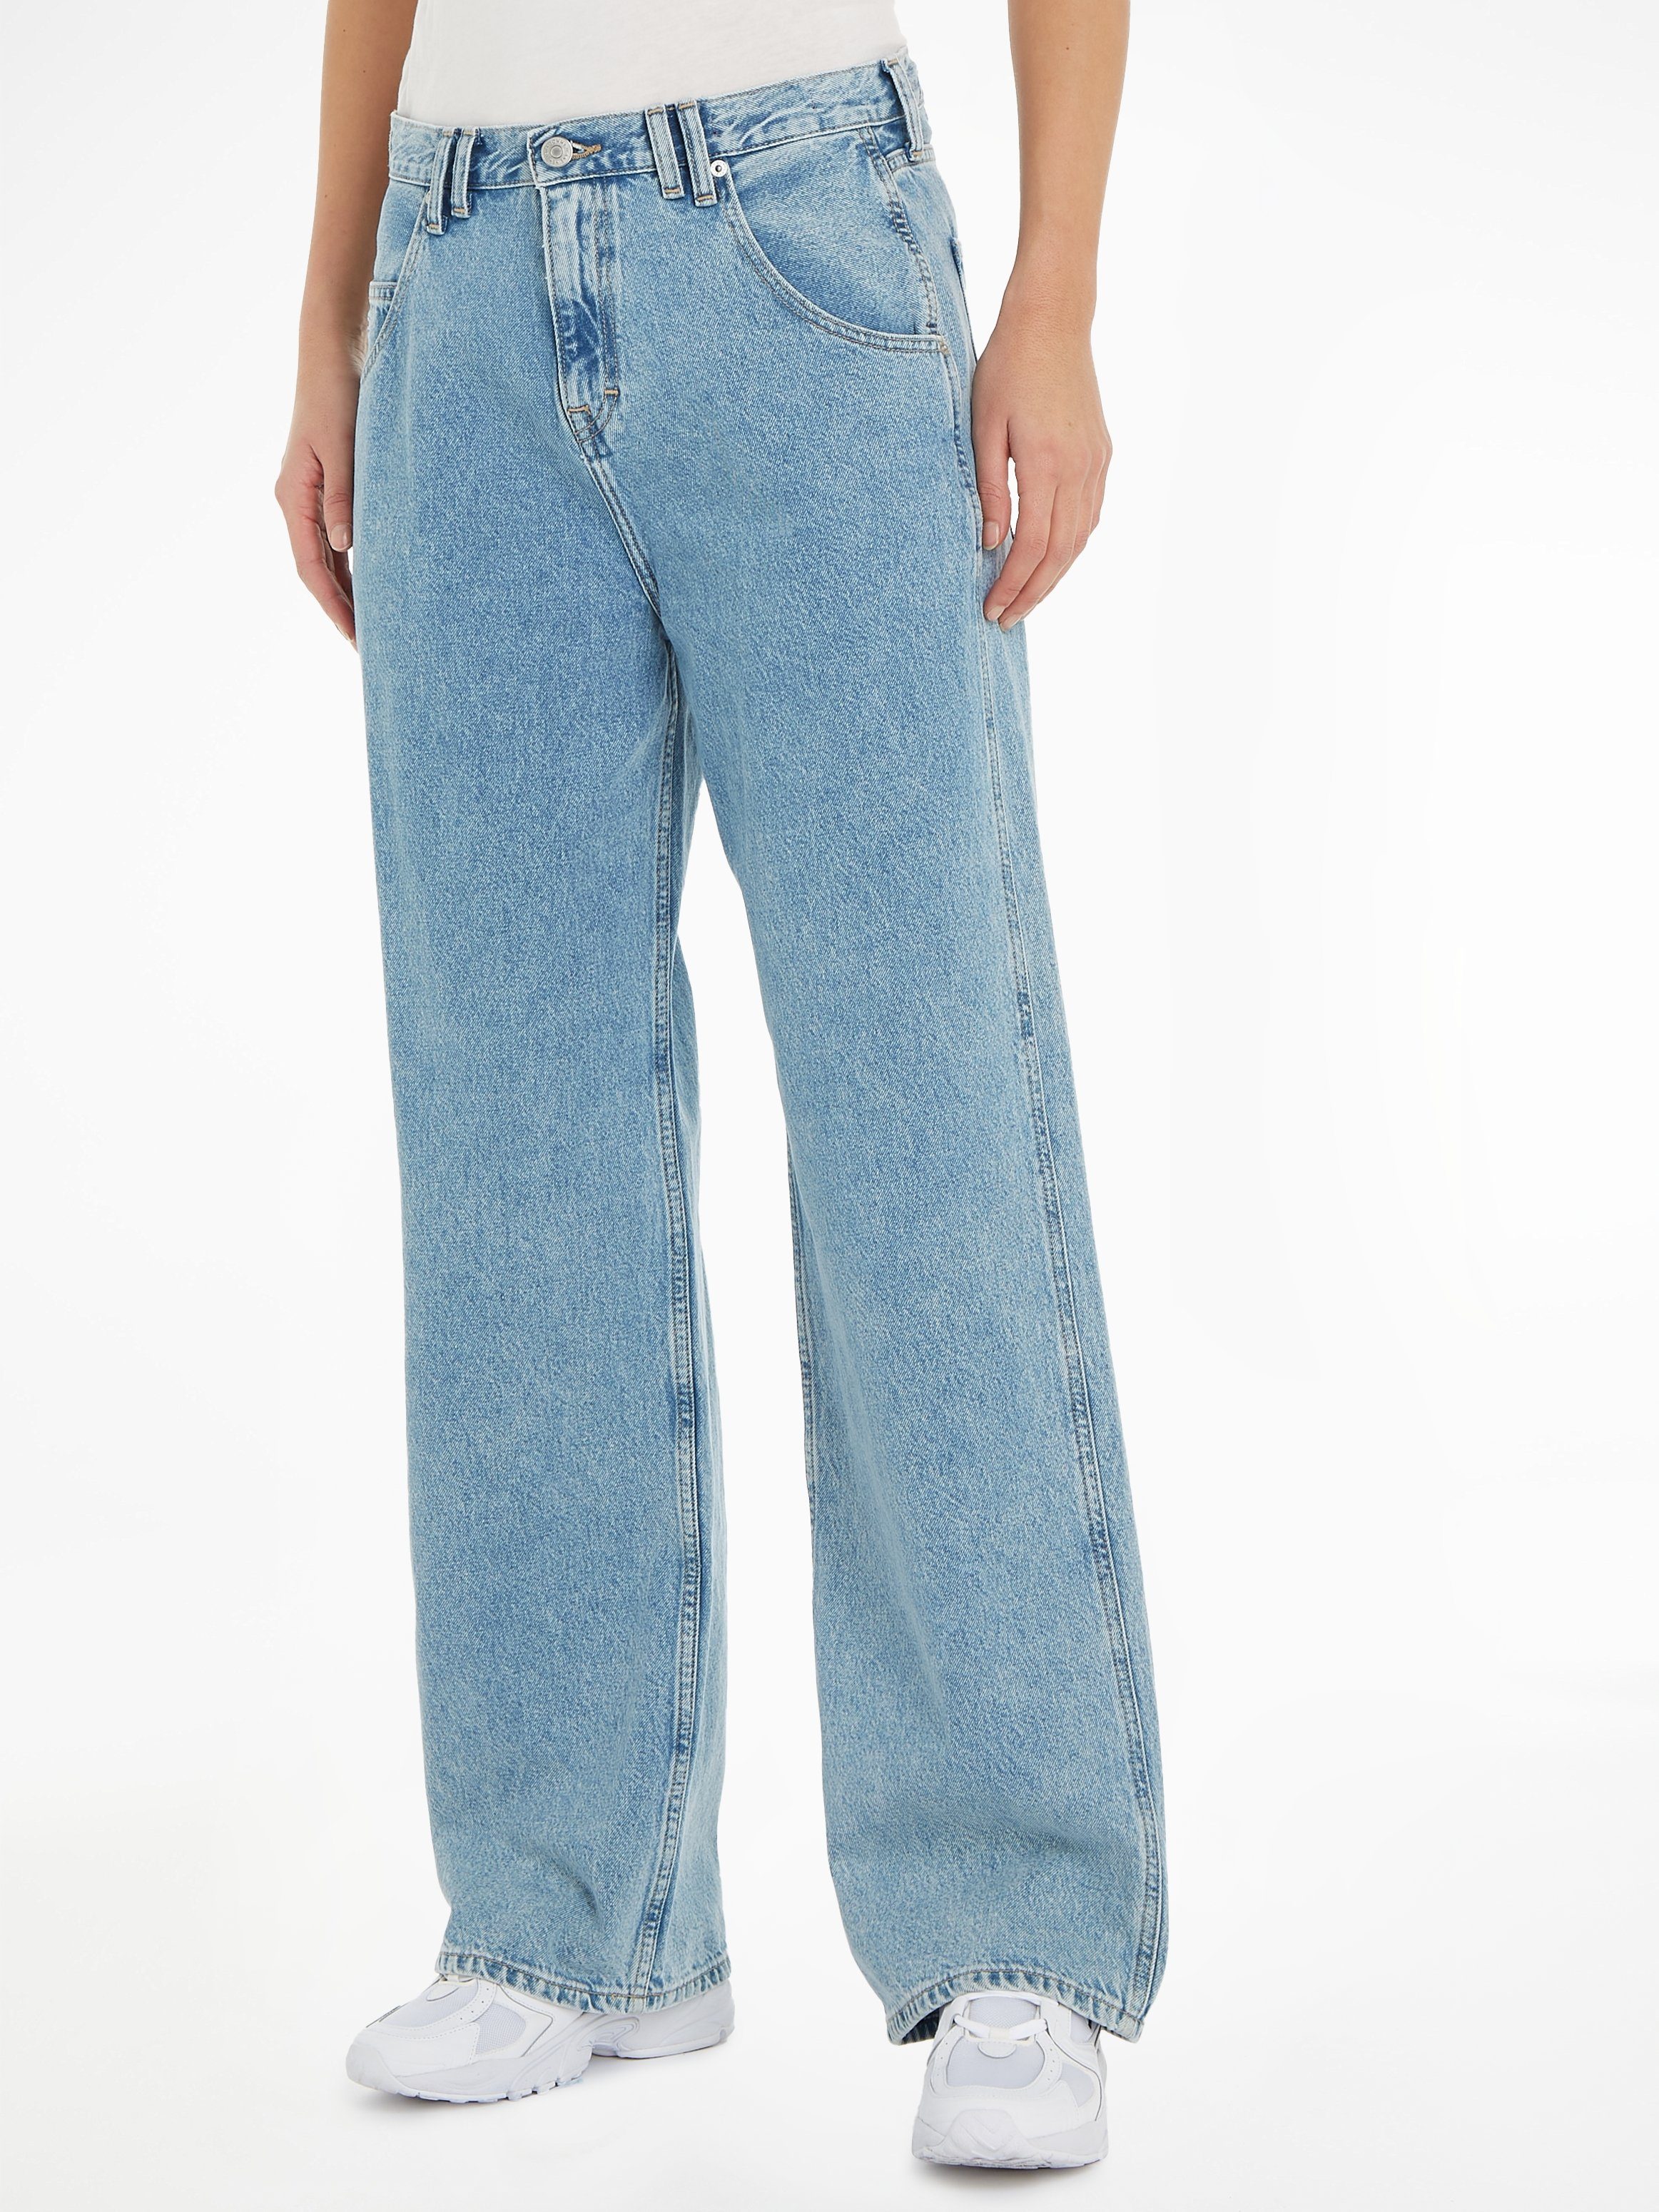 Tommy Jeans Weite Jeans DAISY JEAN LR BGY CG4014 im klassischen  5-Pocket-Style